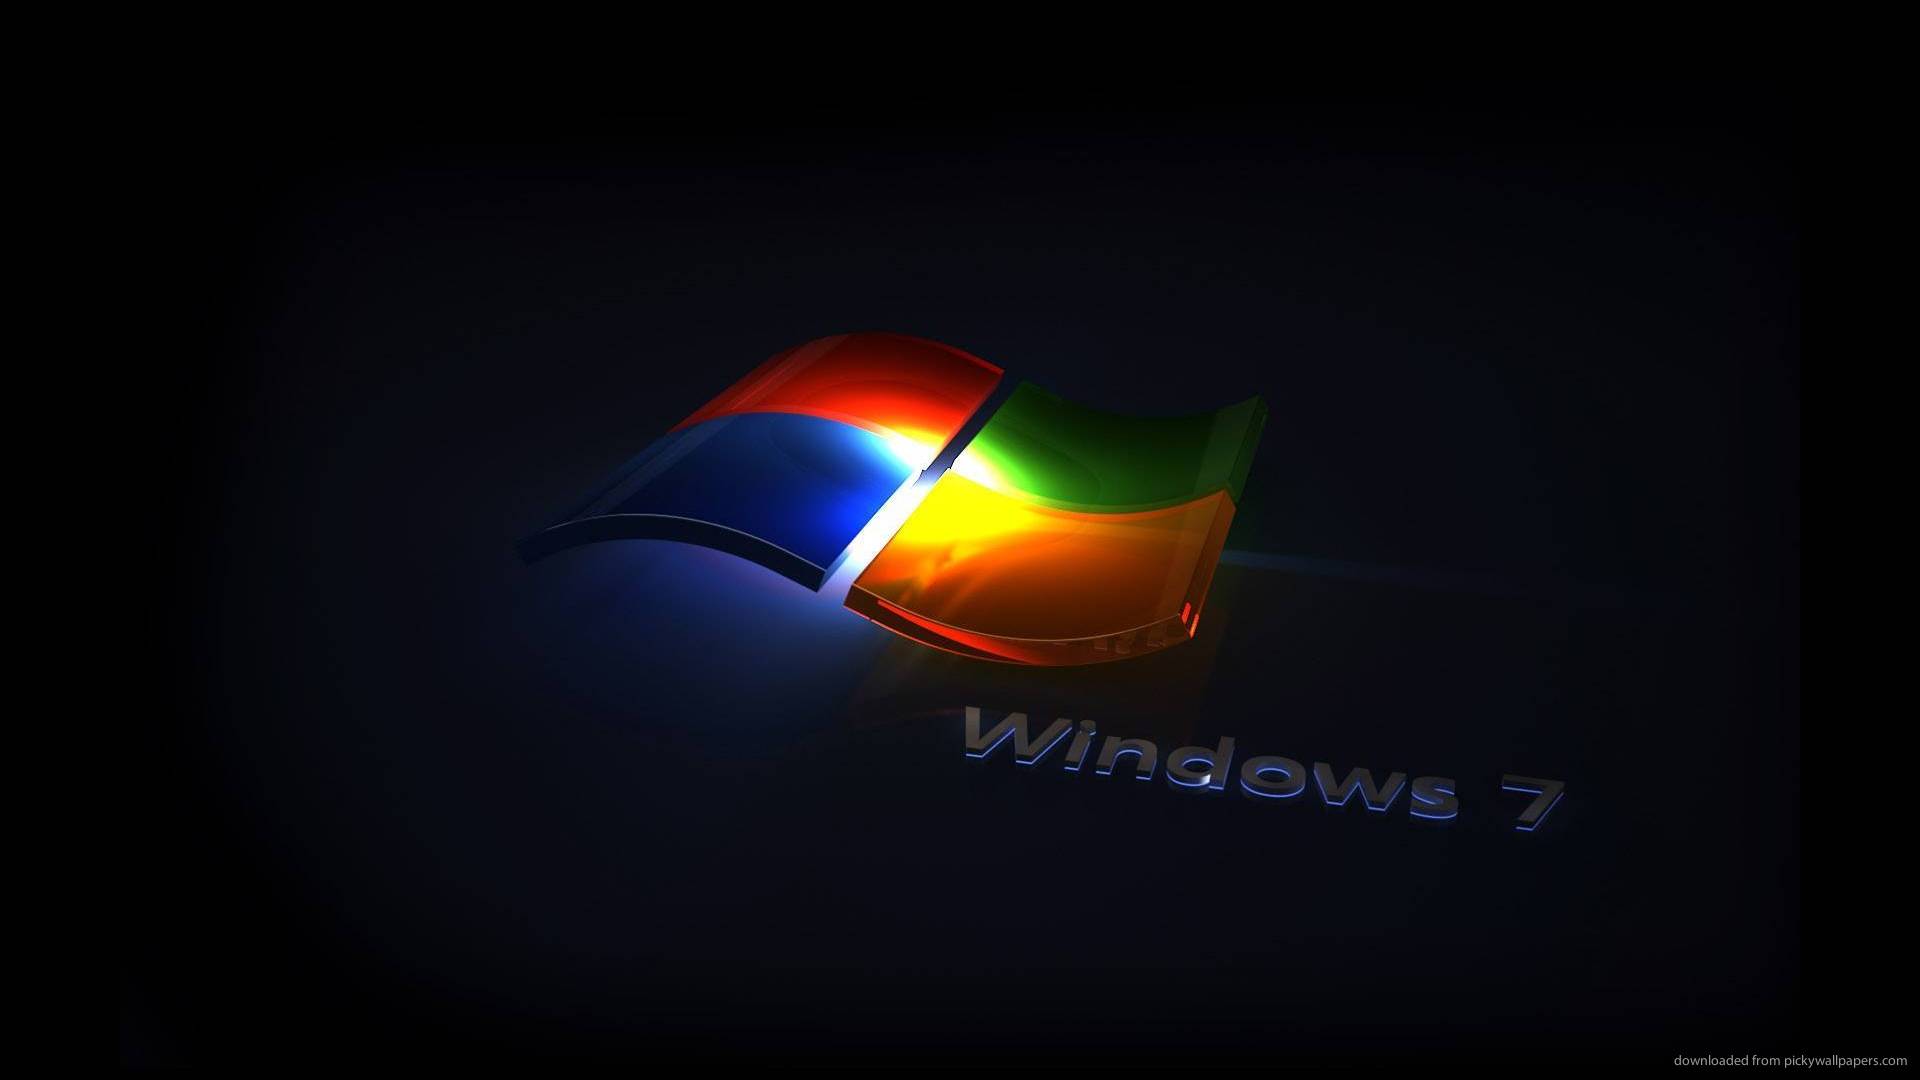 Windows 7 Wallpaper Hd 1920X1080 wallpaper   565143